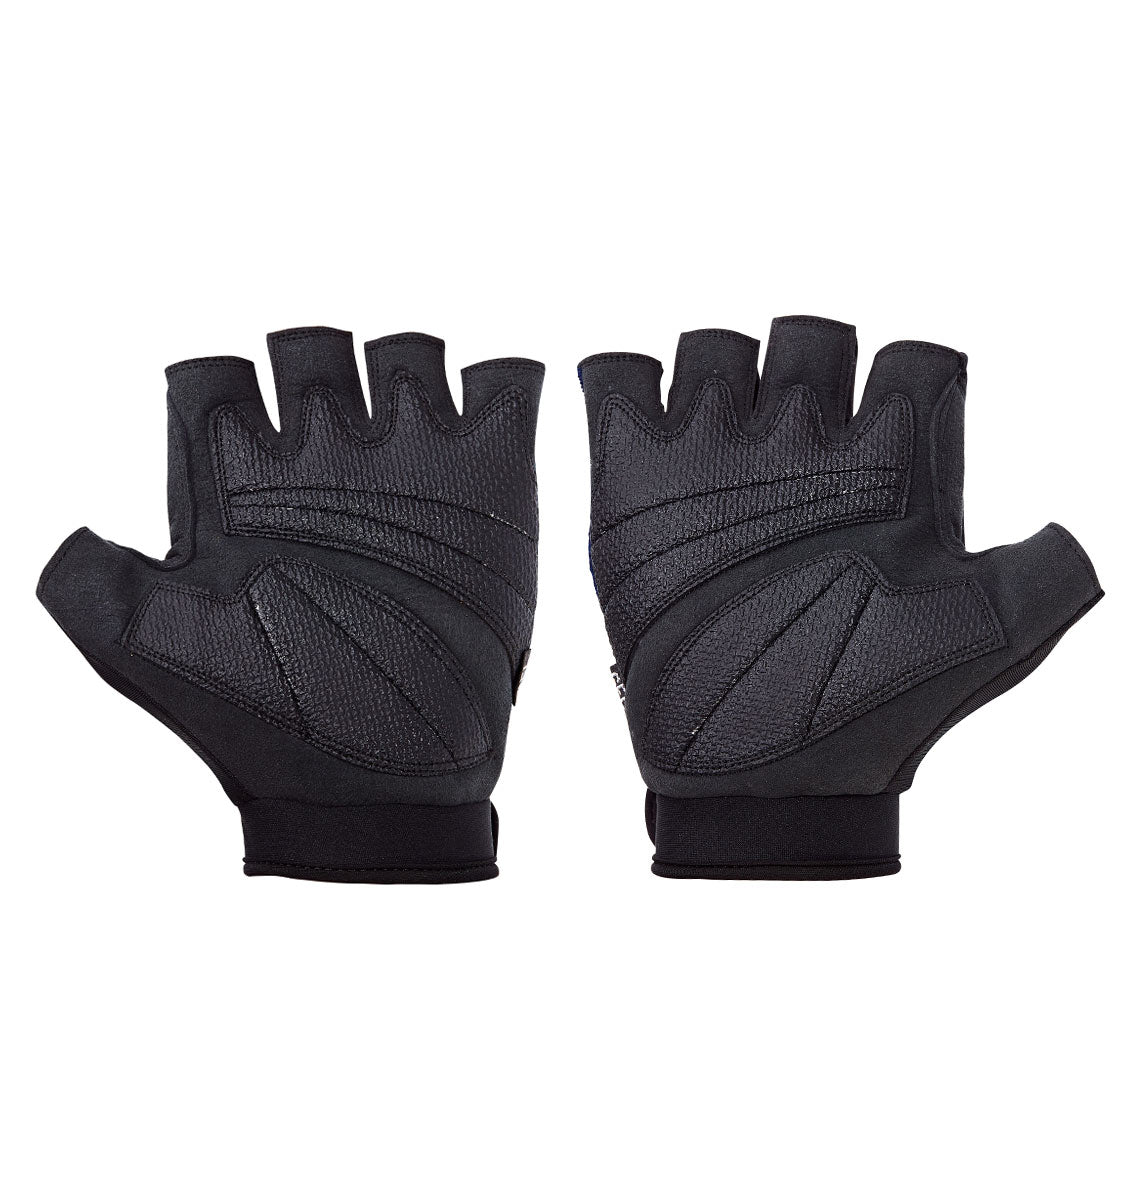 510 Schiek Cross Training and Fitness Gloves Pair Palm